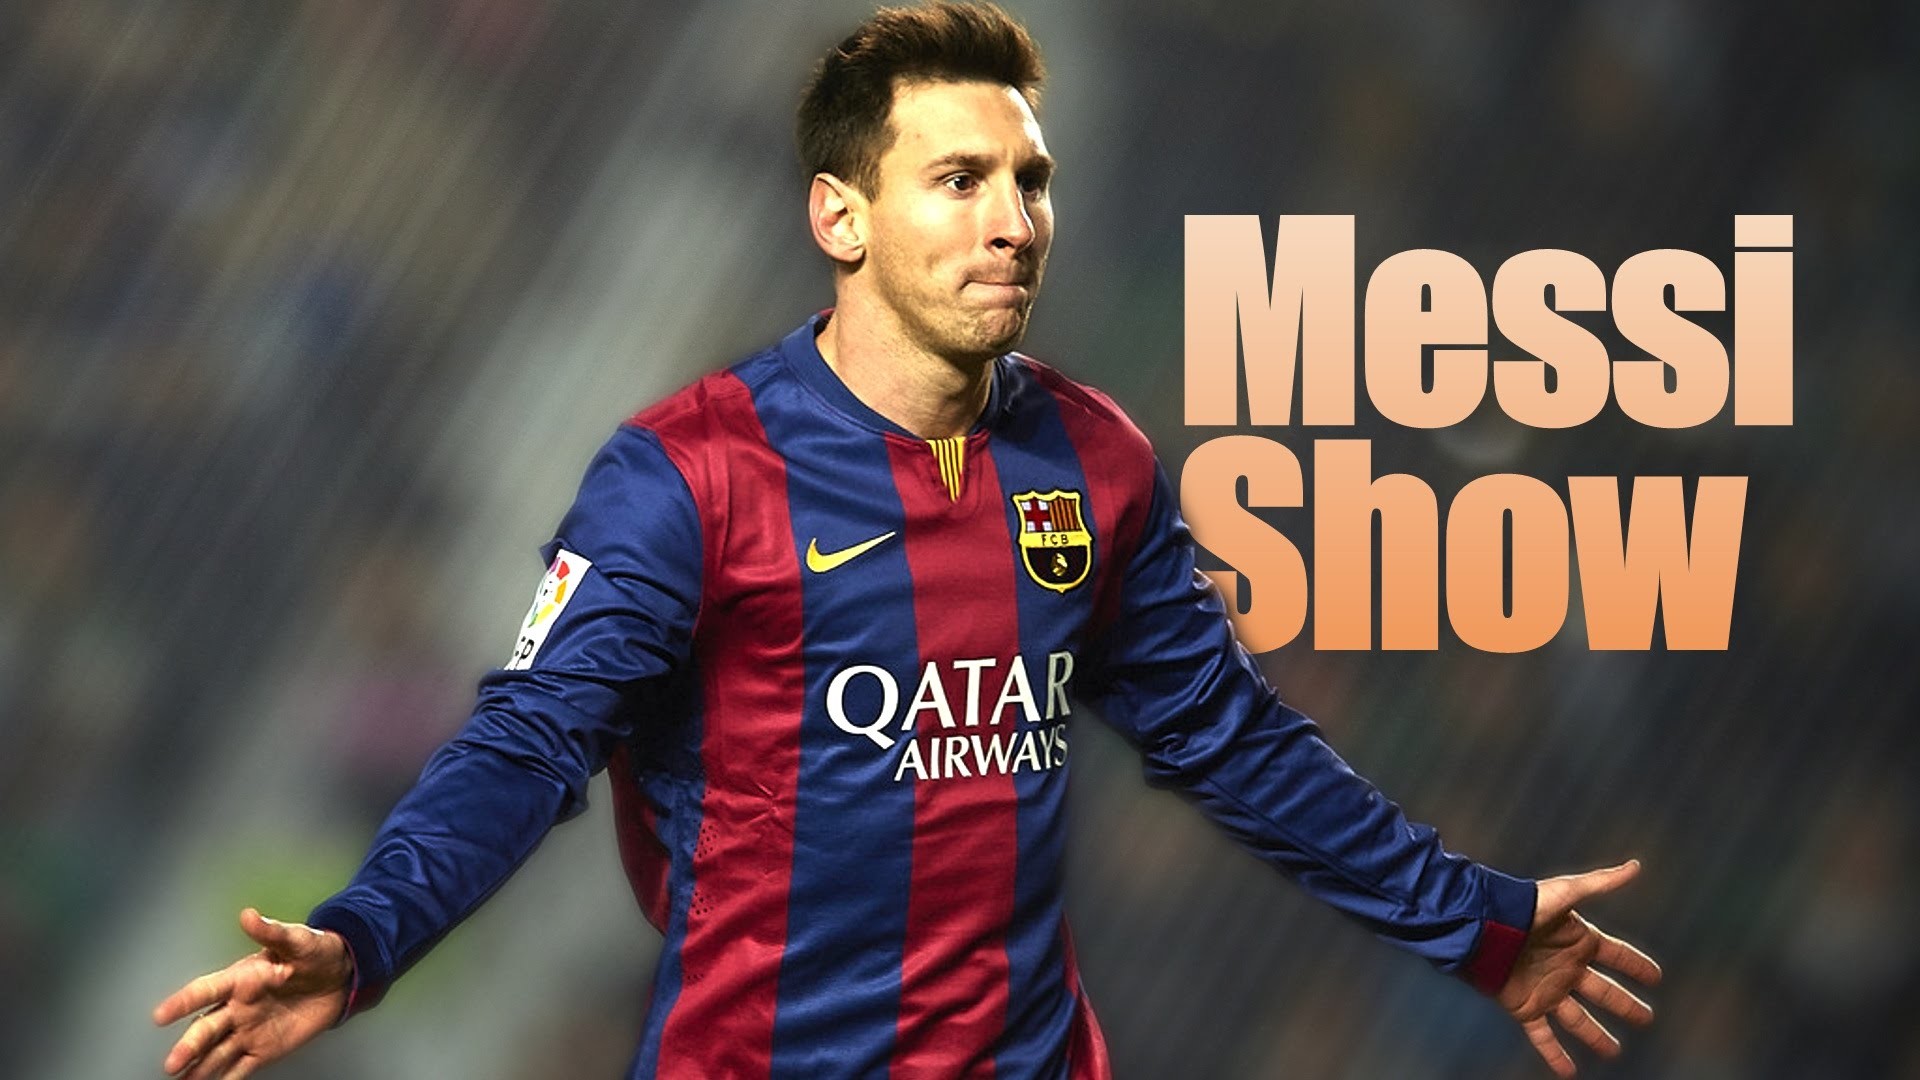 Lionel Messi Wallpaper HD 2018 (77+ images)